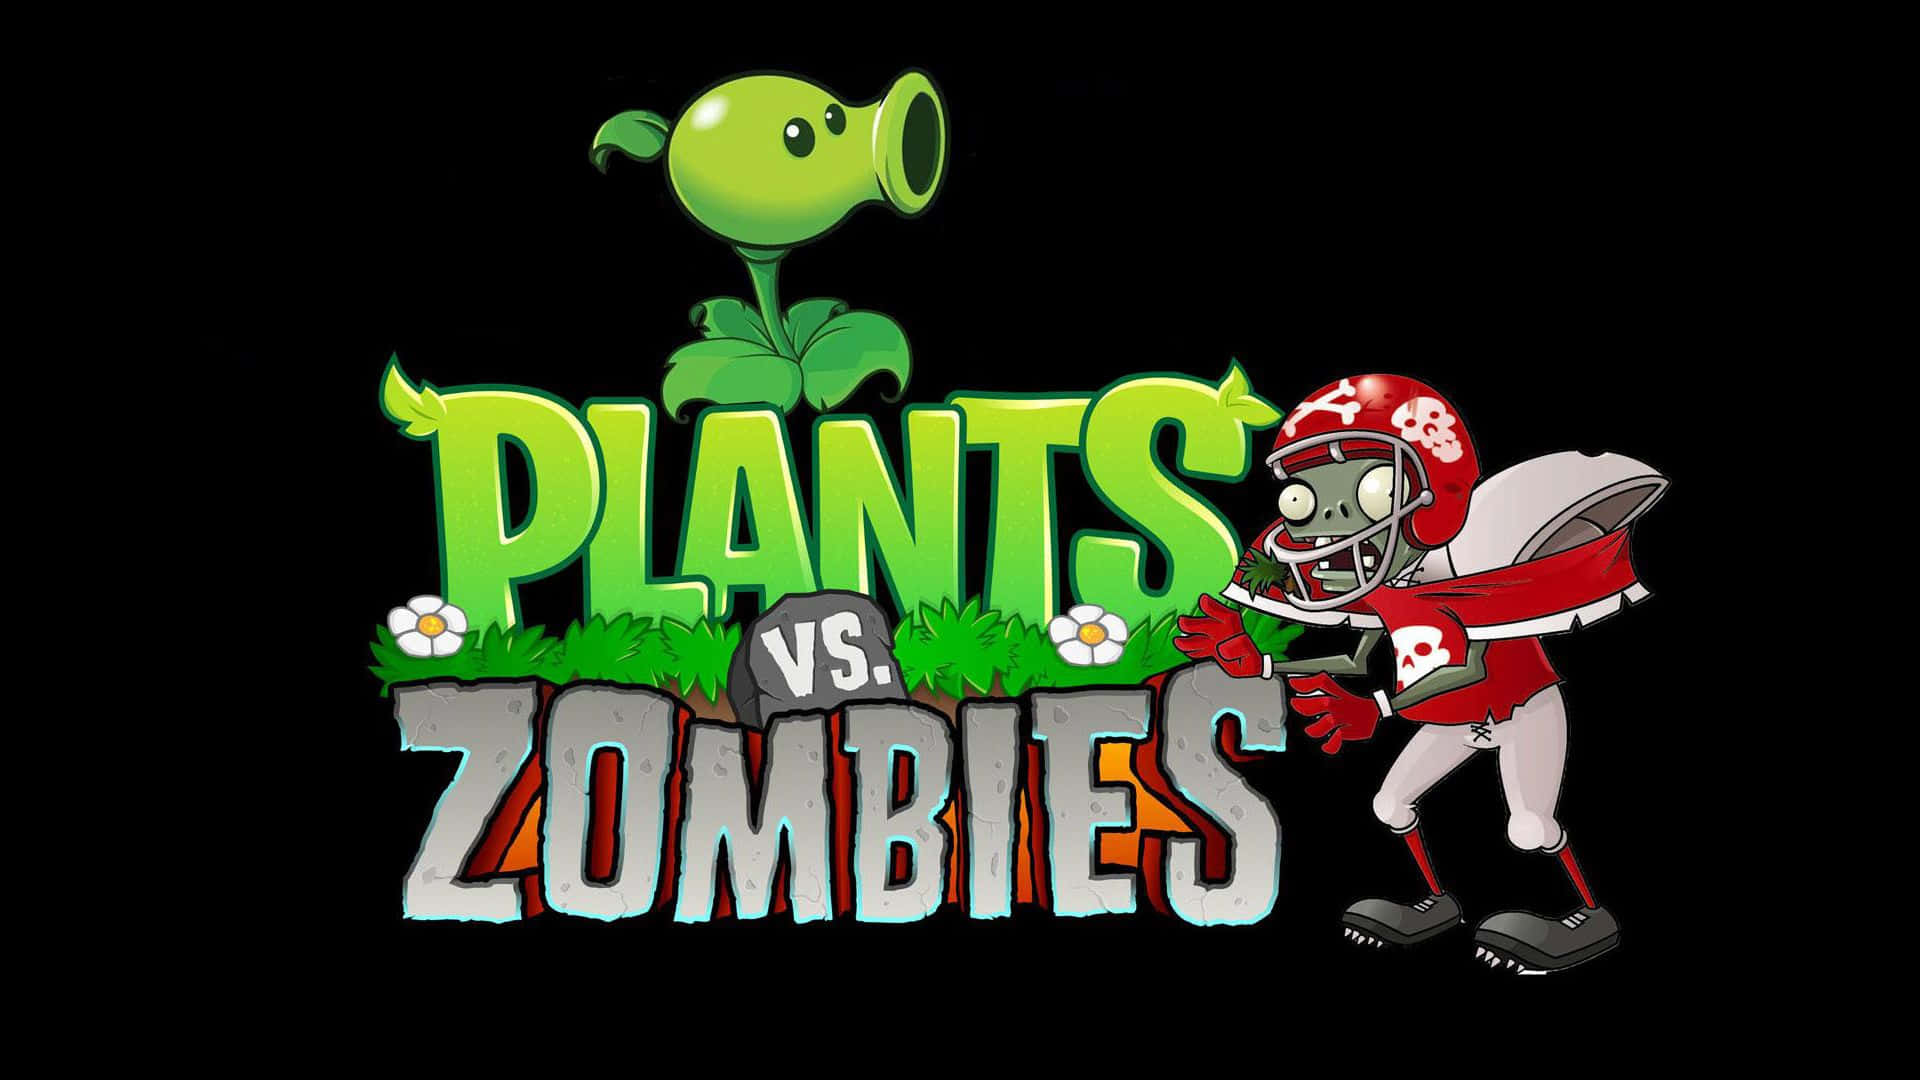 Plants va zombies. Плантс версус зомби. Плантс версус зомби 3. Растения против зомби обложка игры. Растения против зомби обои.